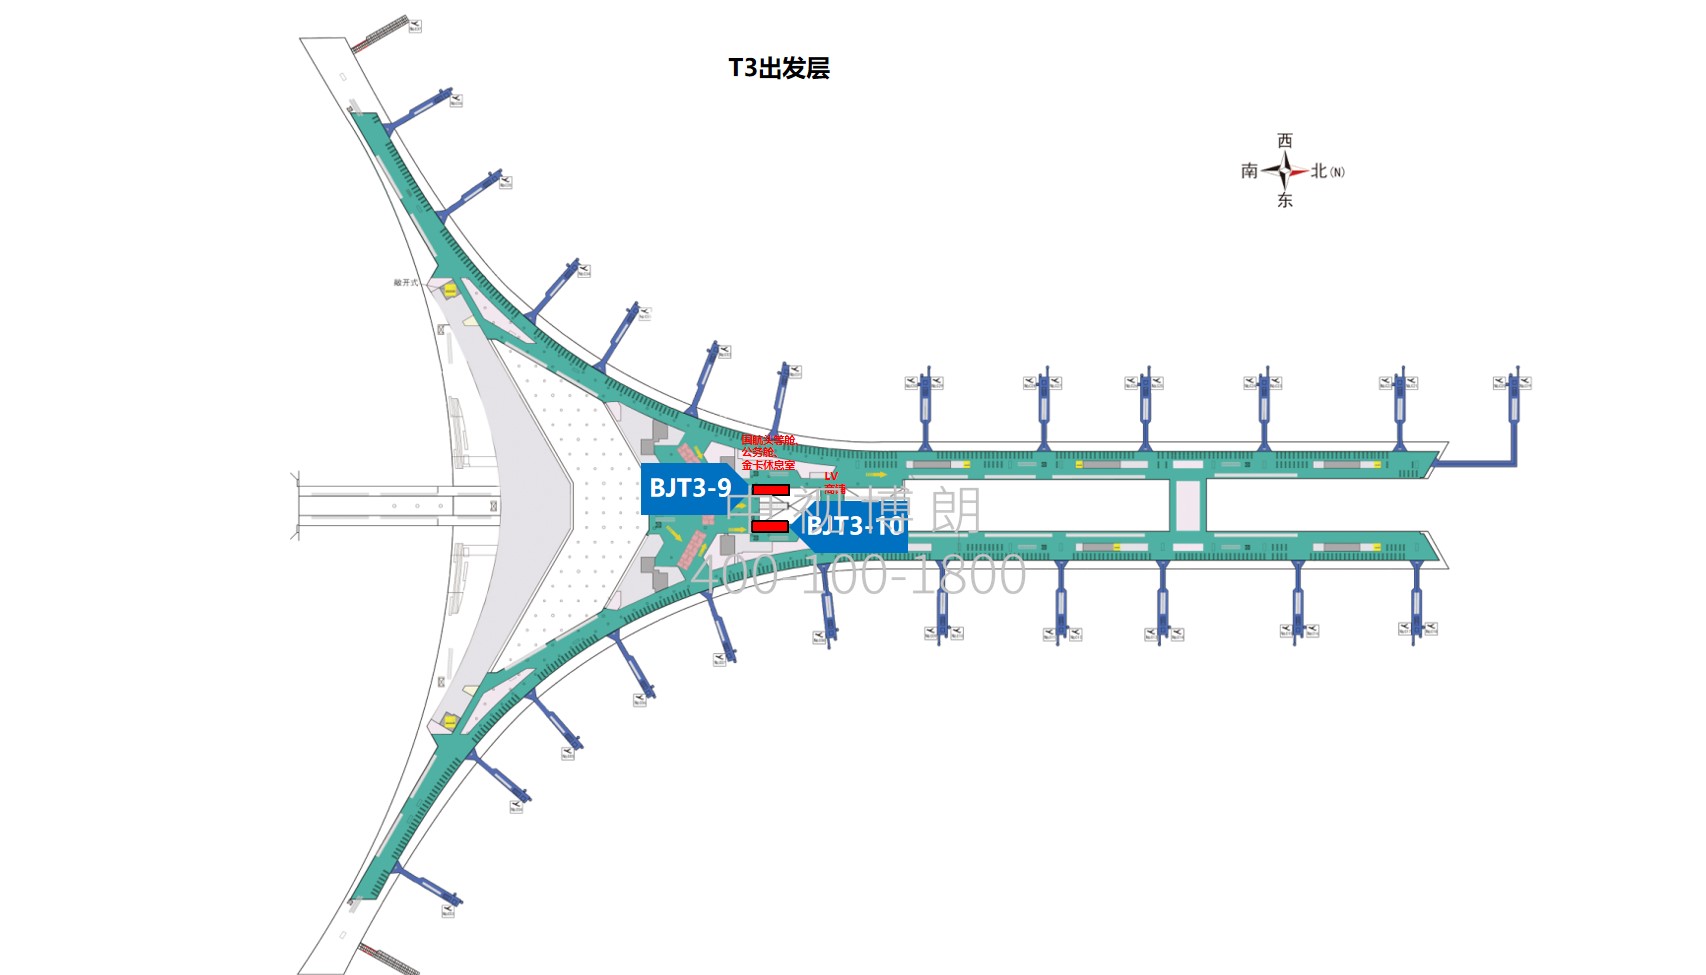 北京首都机场广告-T3 Domestic Departure Security Zone Light Box Set 1位置图